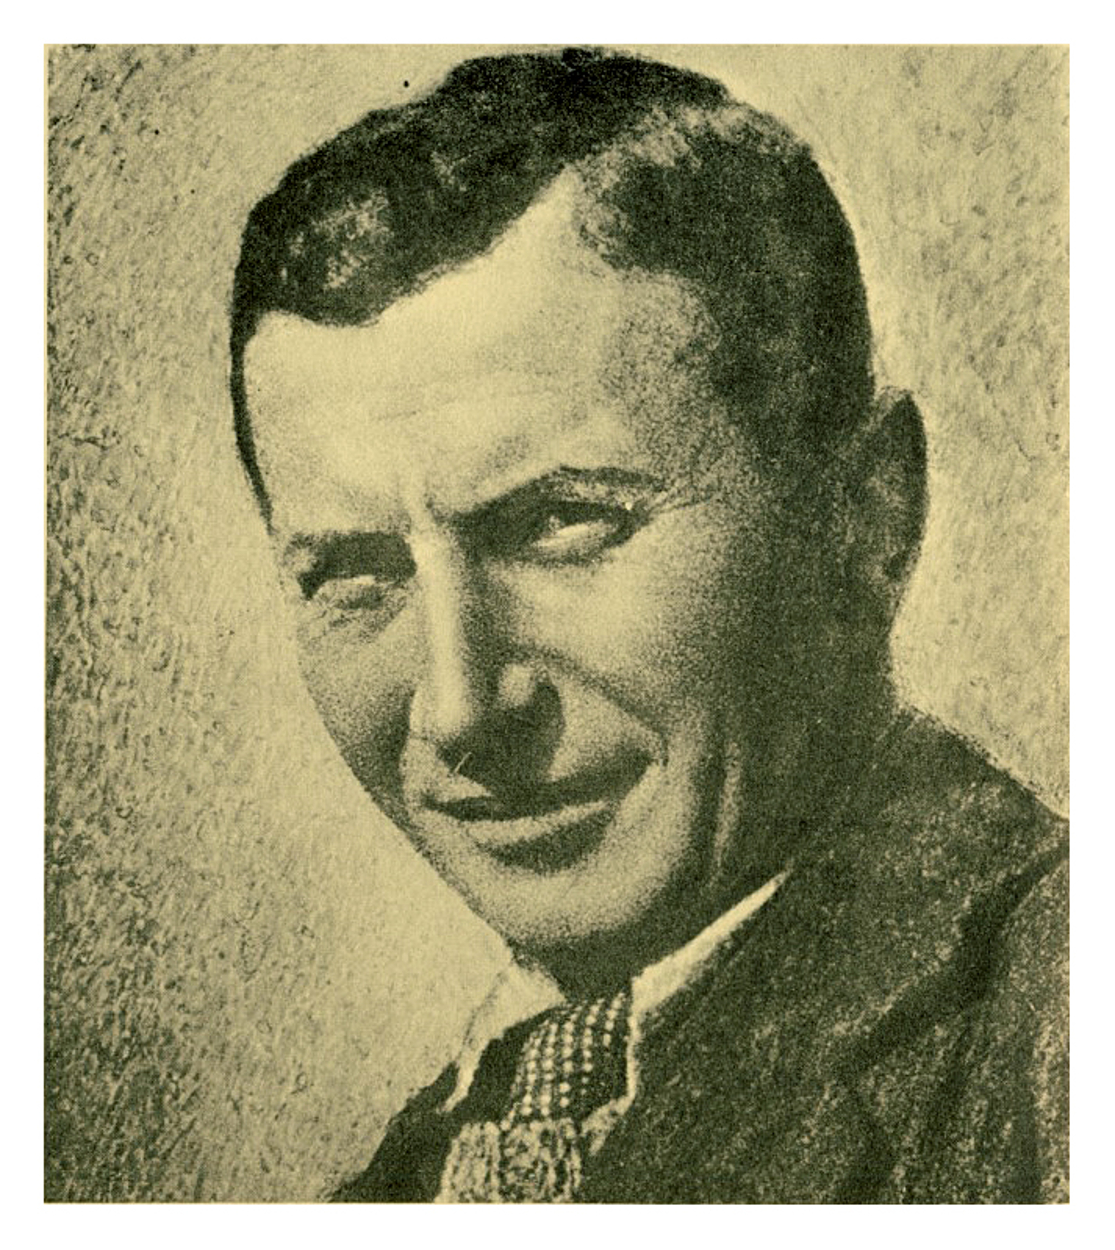 Zoltán Palugyay - November 8, 1898 - September 18, 1935